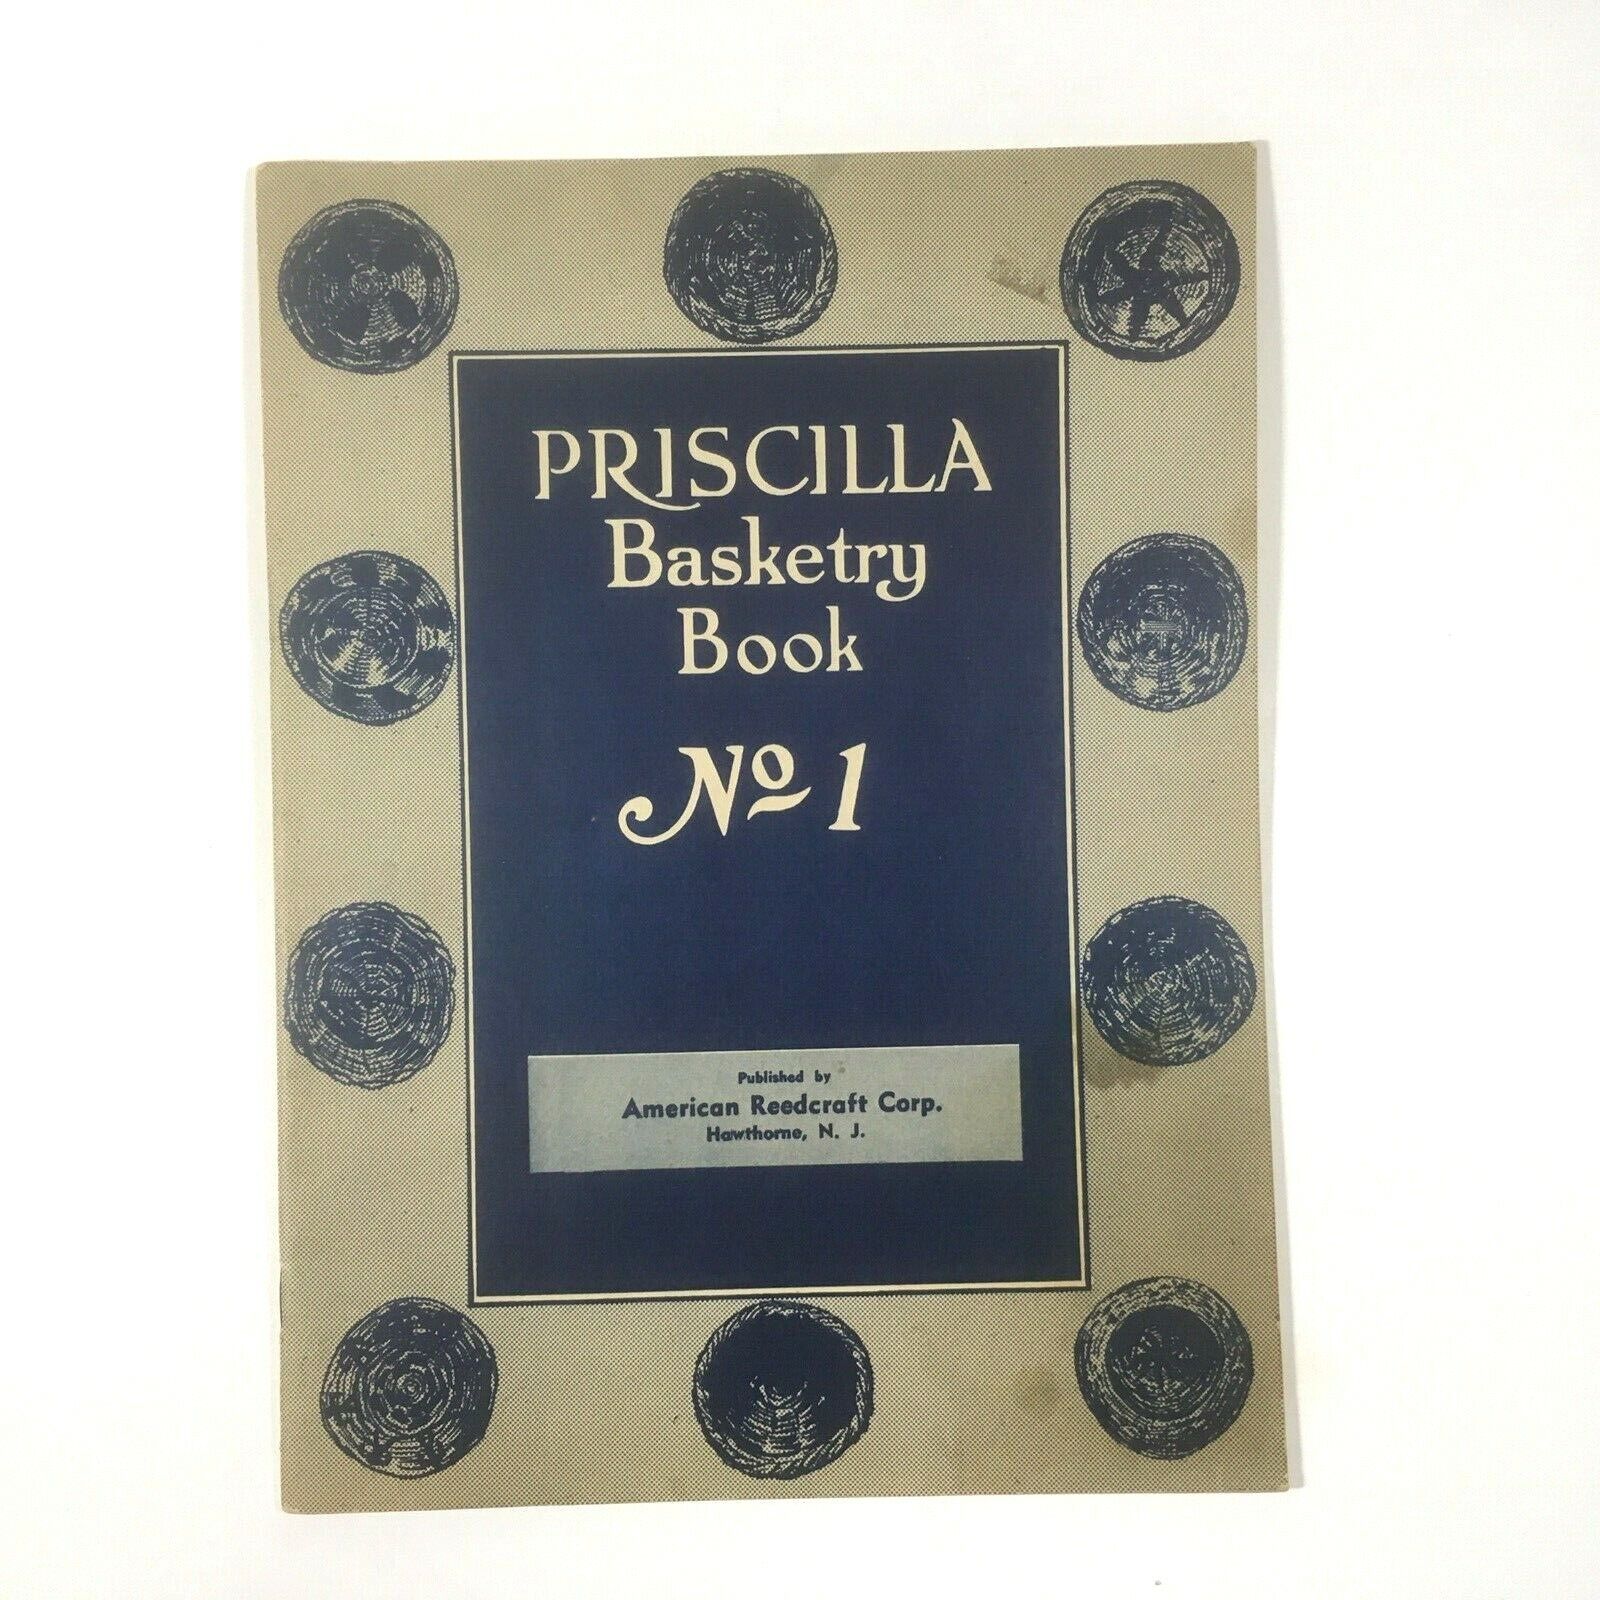 1924 Priscilla Basketry Book No 1 American Reedcraft Corp Pbk Hawthorne, Nj